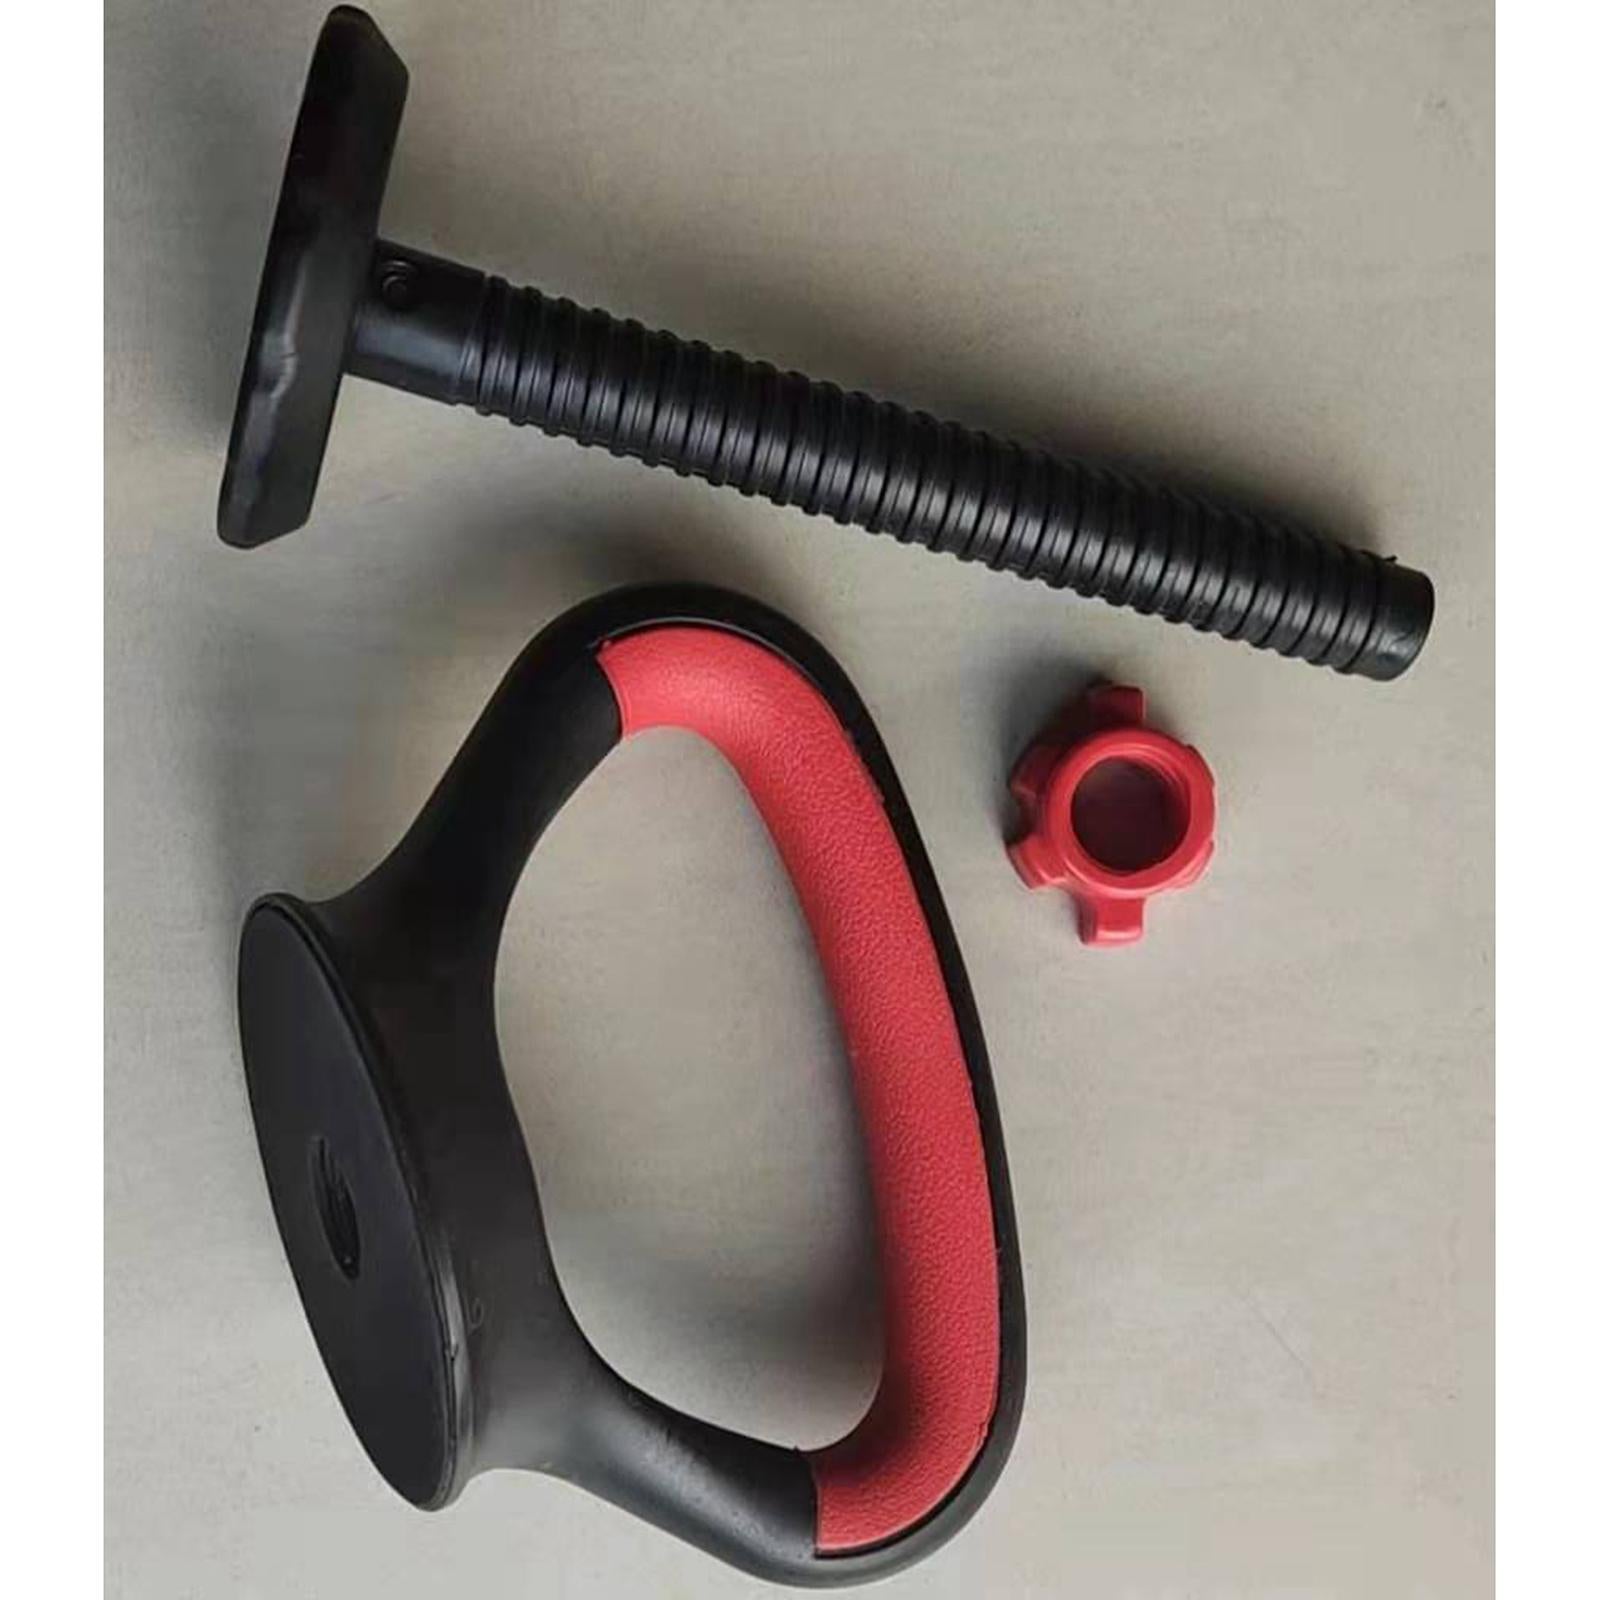 Adjustable Metal Kettlebell Handle for adjustable kettlebell weights